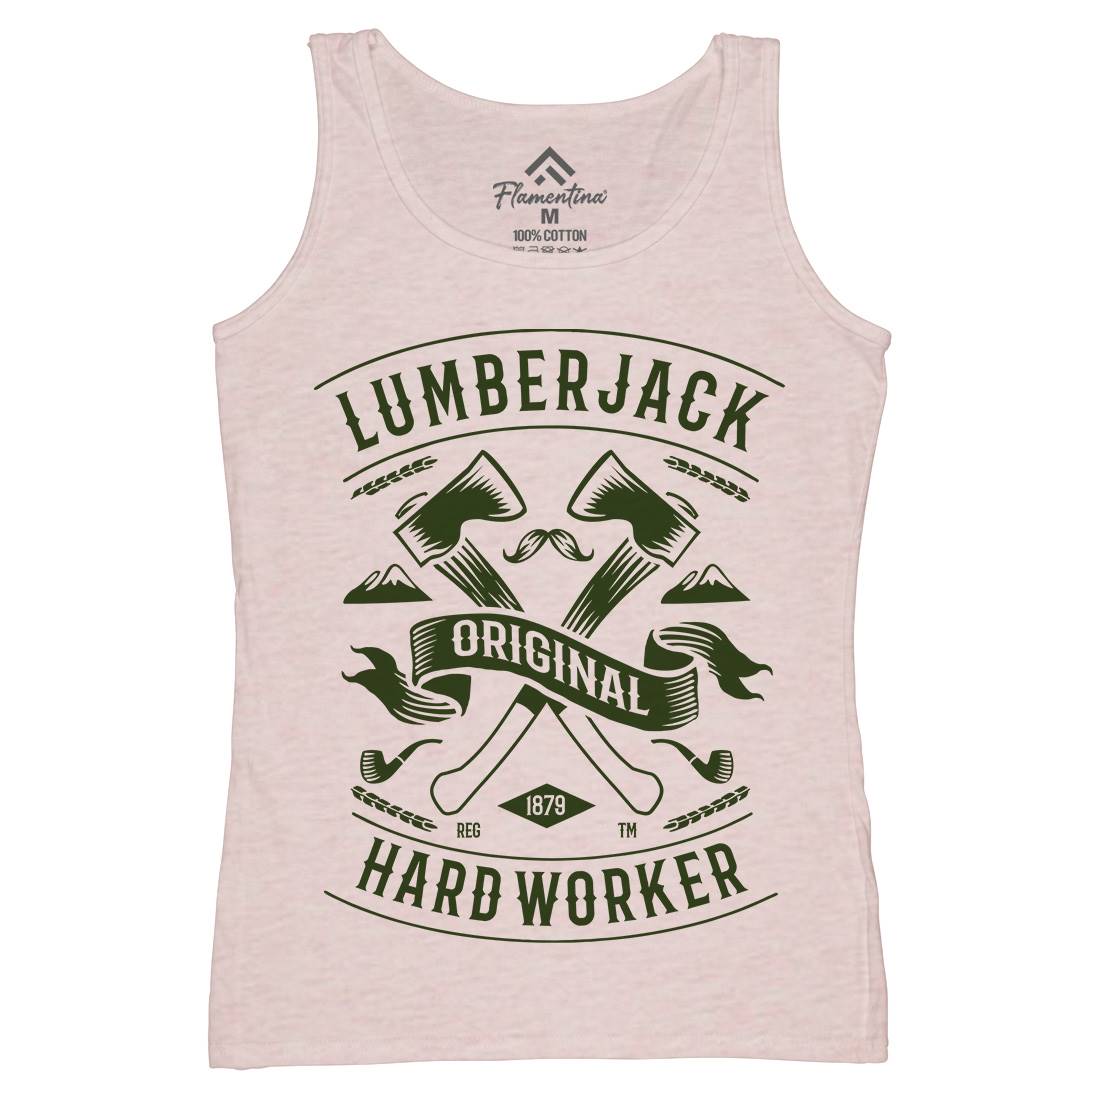 Lumberjack Womens Organic Tank Top Vest Retro B229